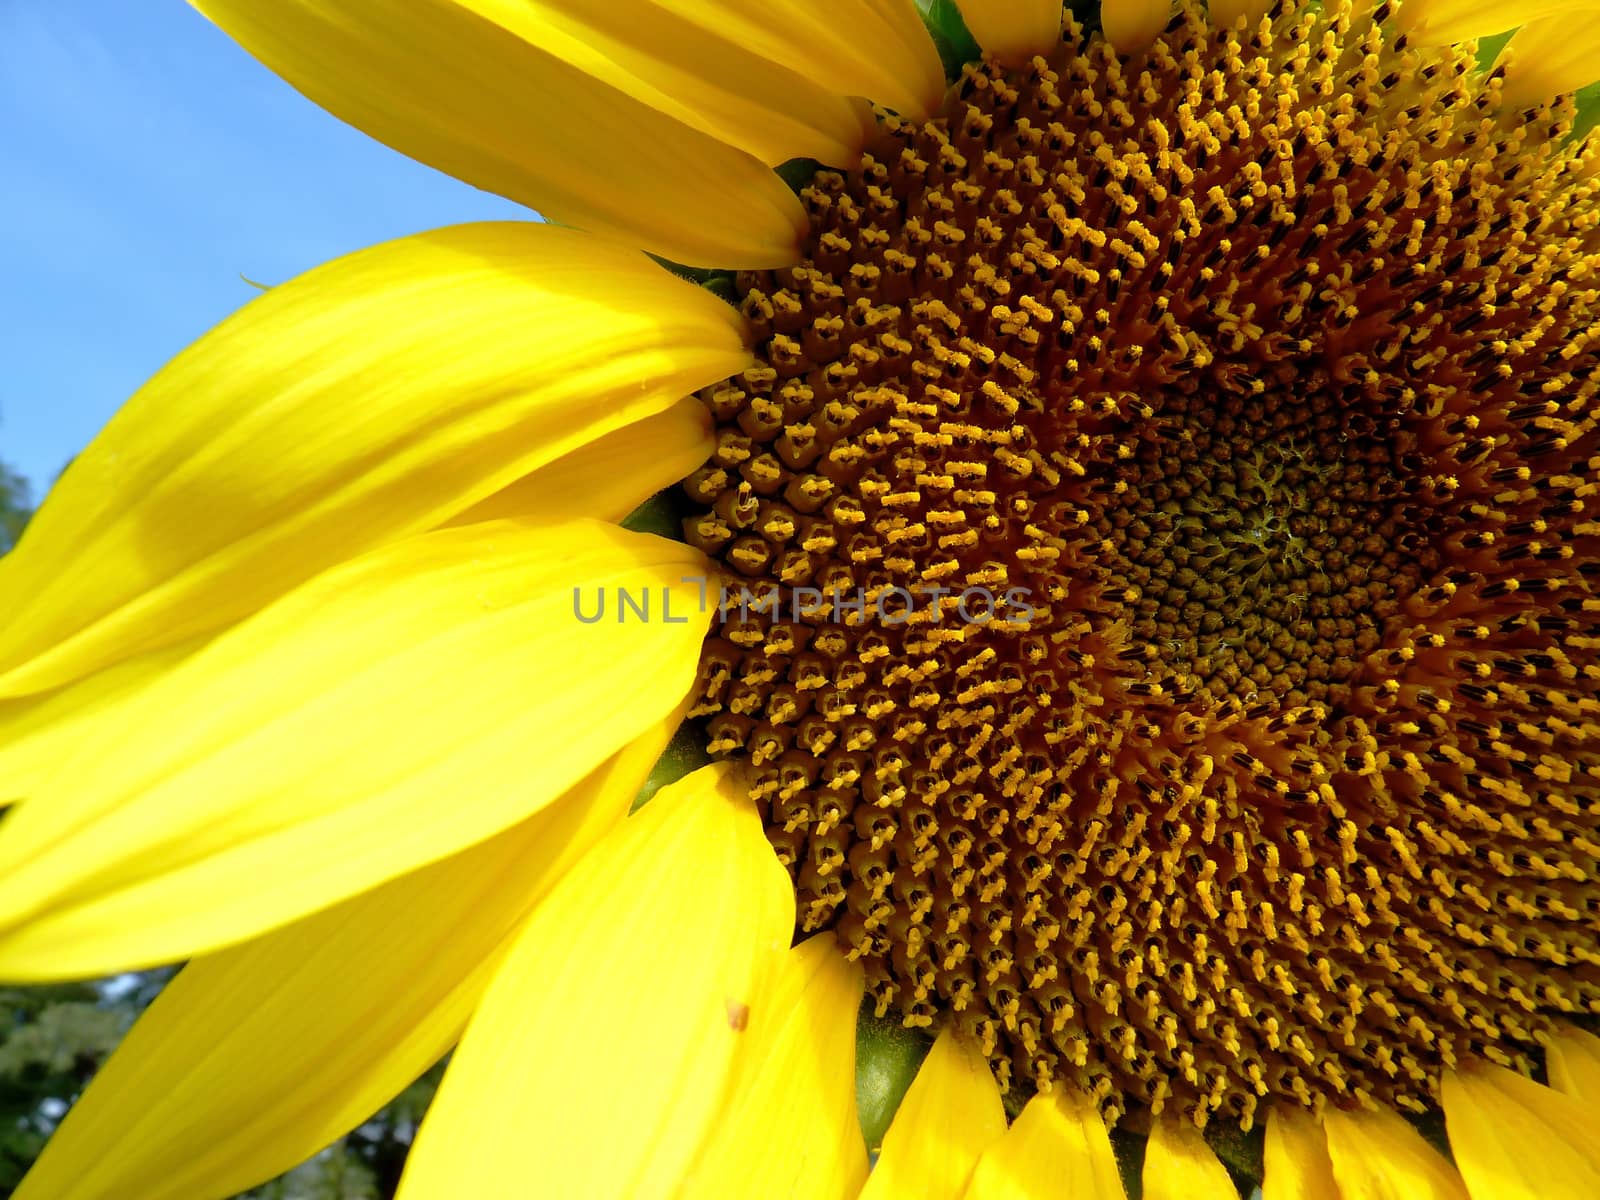 Sunflower in the field in the Rostov region in Russia